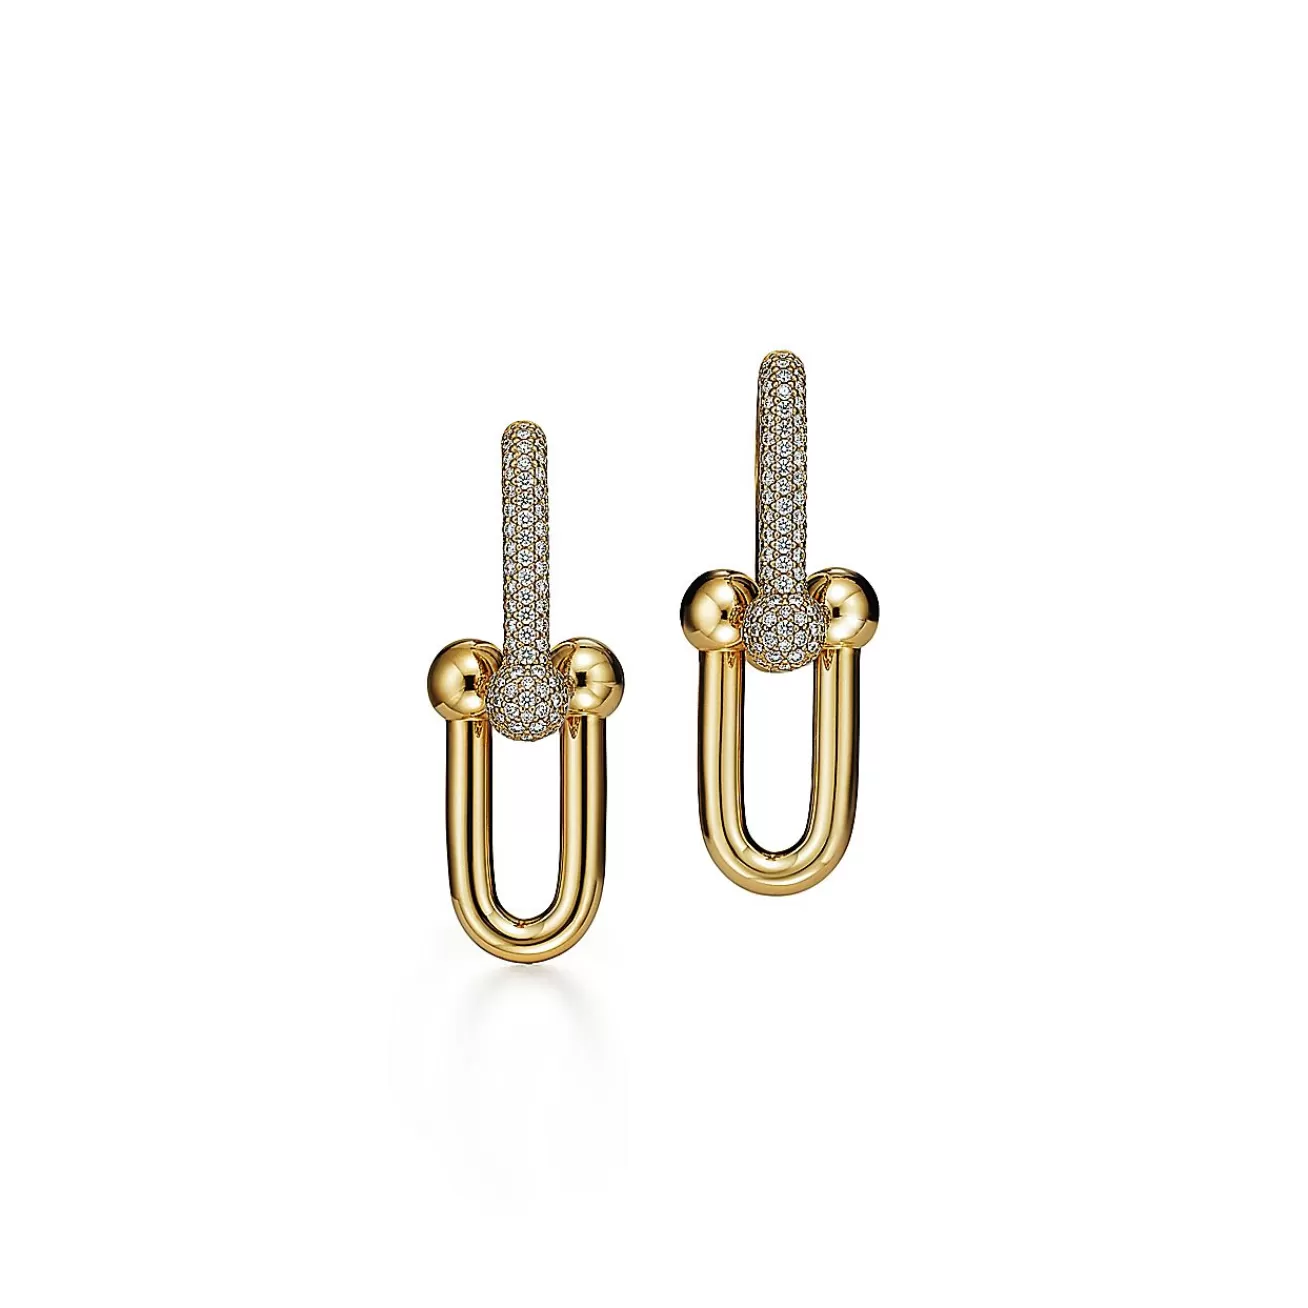 Tiffany & Co. Tiffany HardWear Large Link Earrings in Yellow Gold with Pavé Diamonds | ^ Earrings | Gold Jewelry